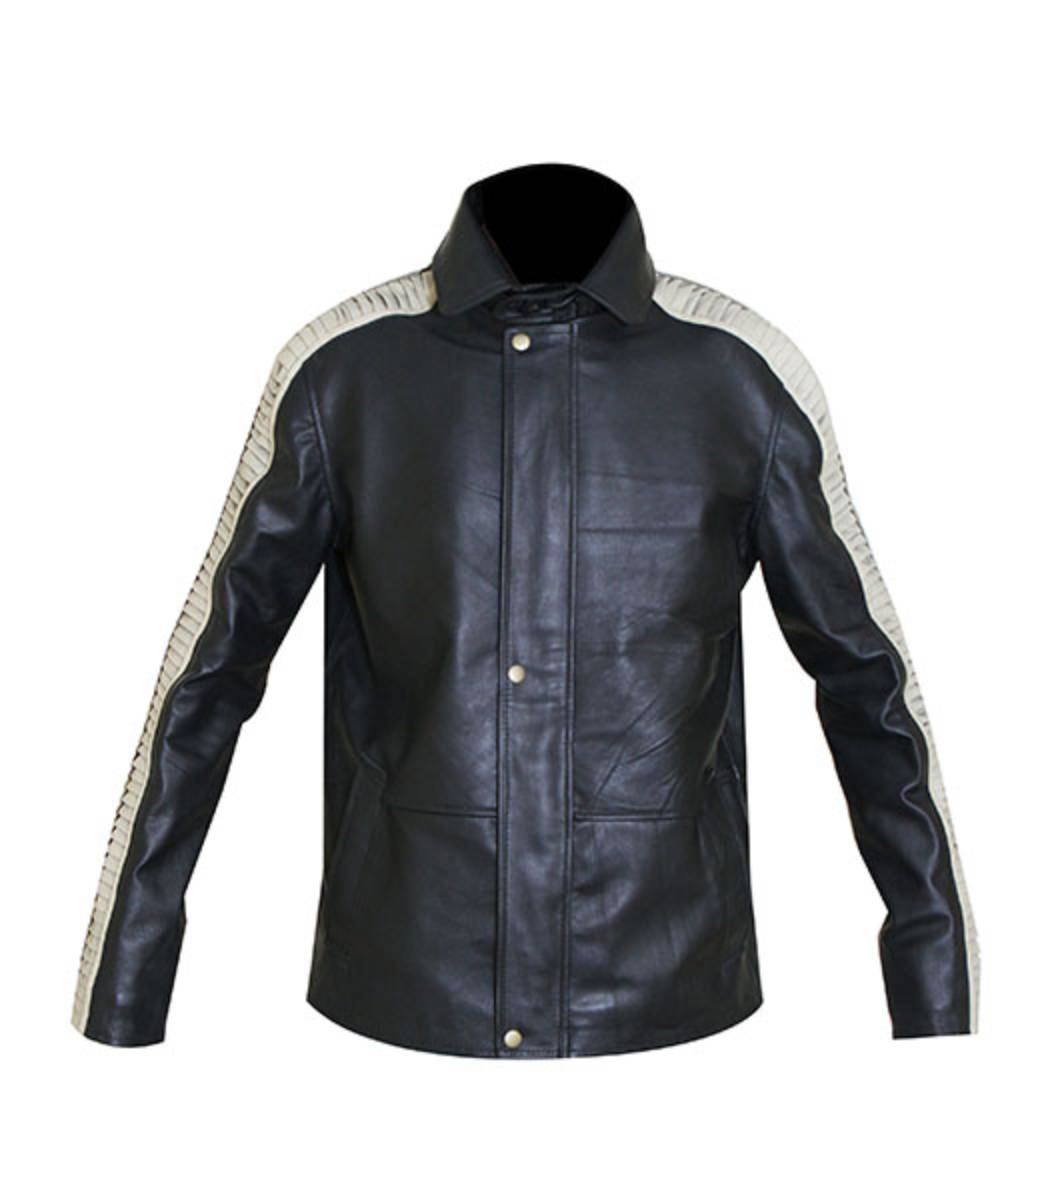 Cassian Andors Jacket